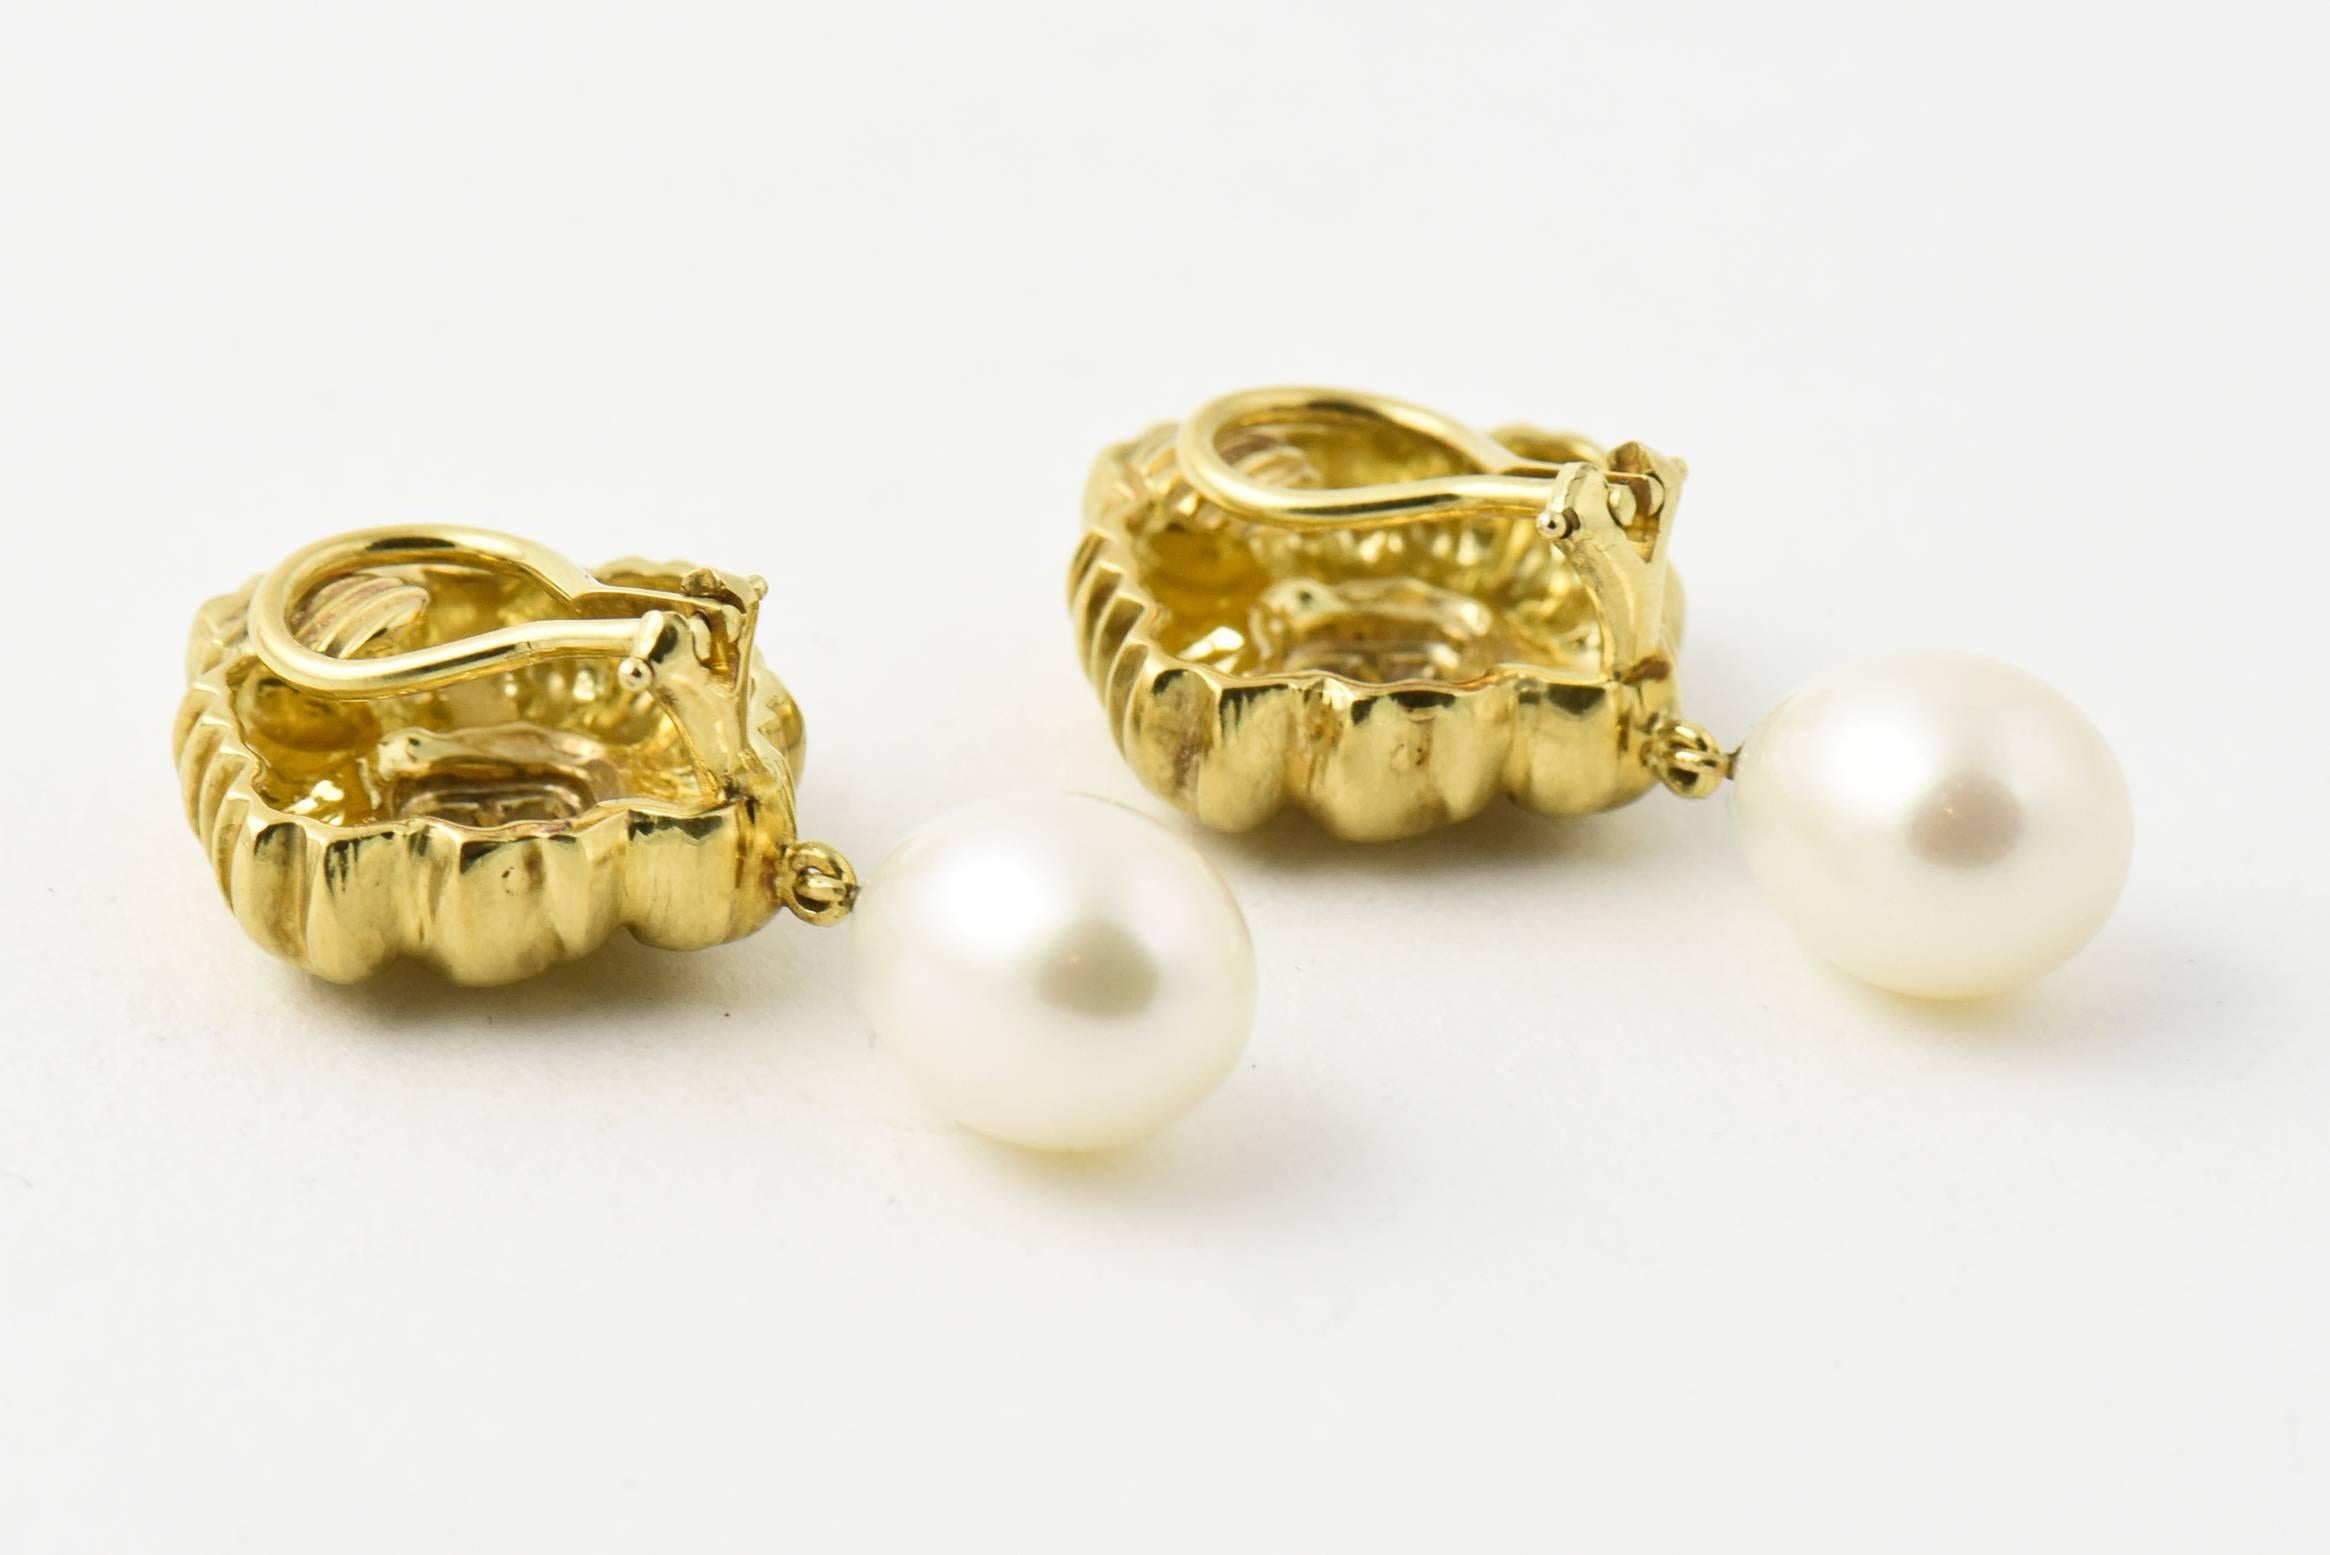 Stylized Diamond Gold Flower Earrings with Pearl Drops 2